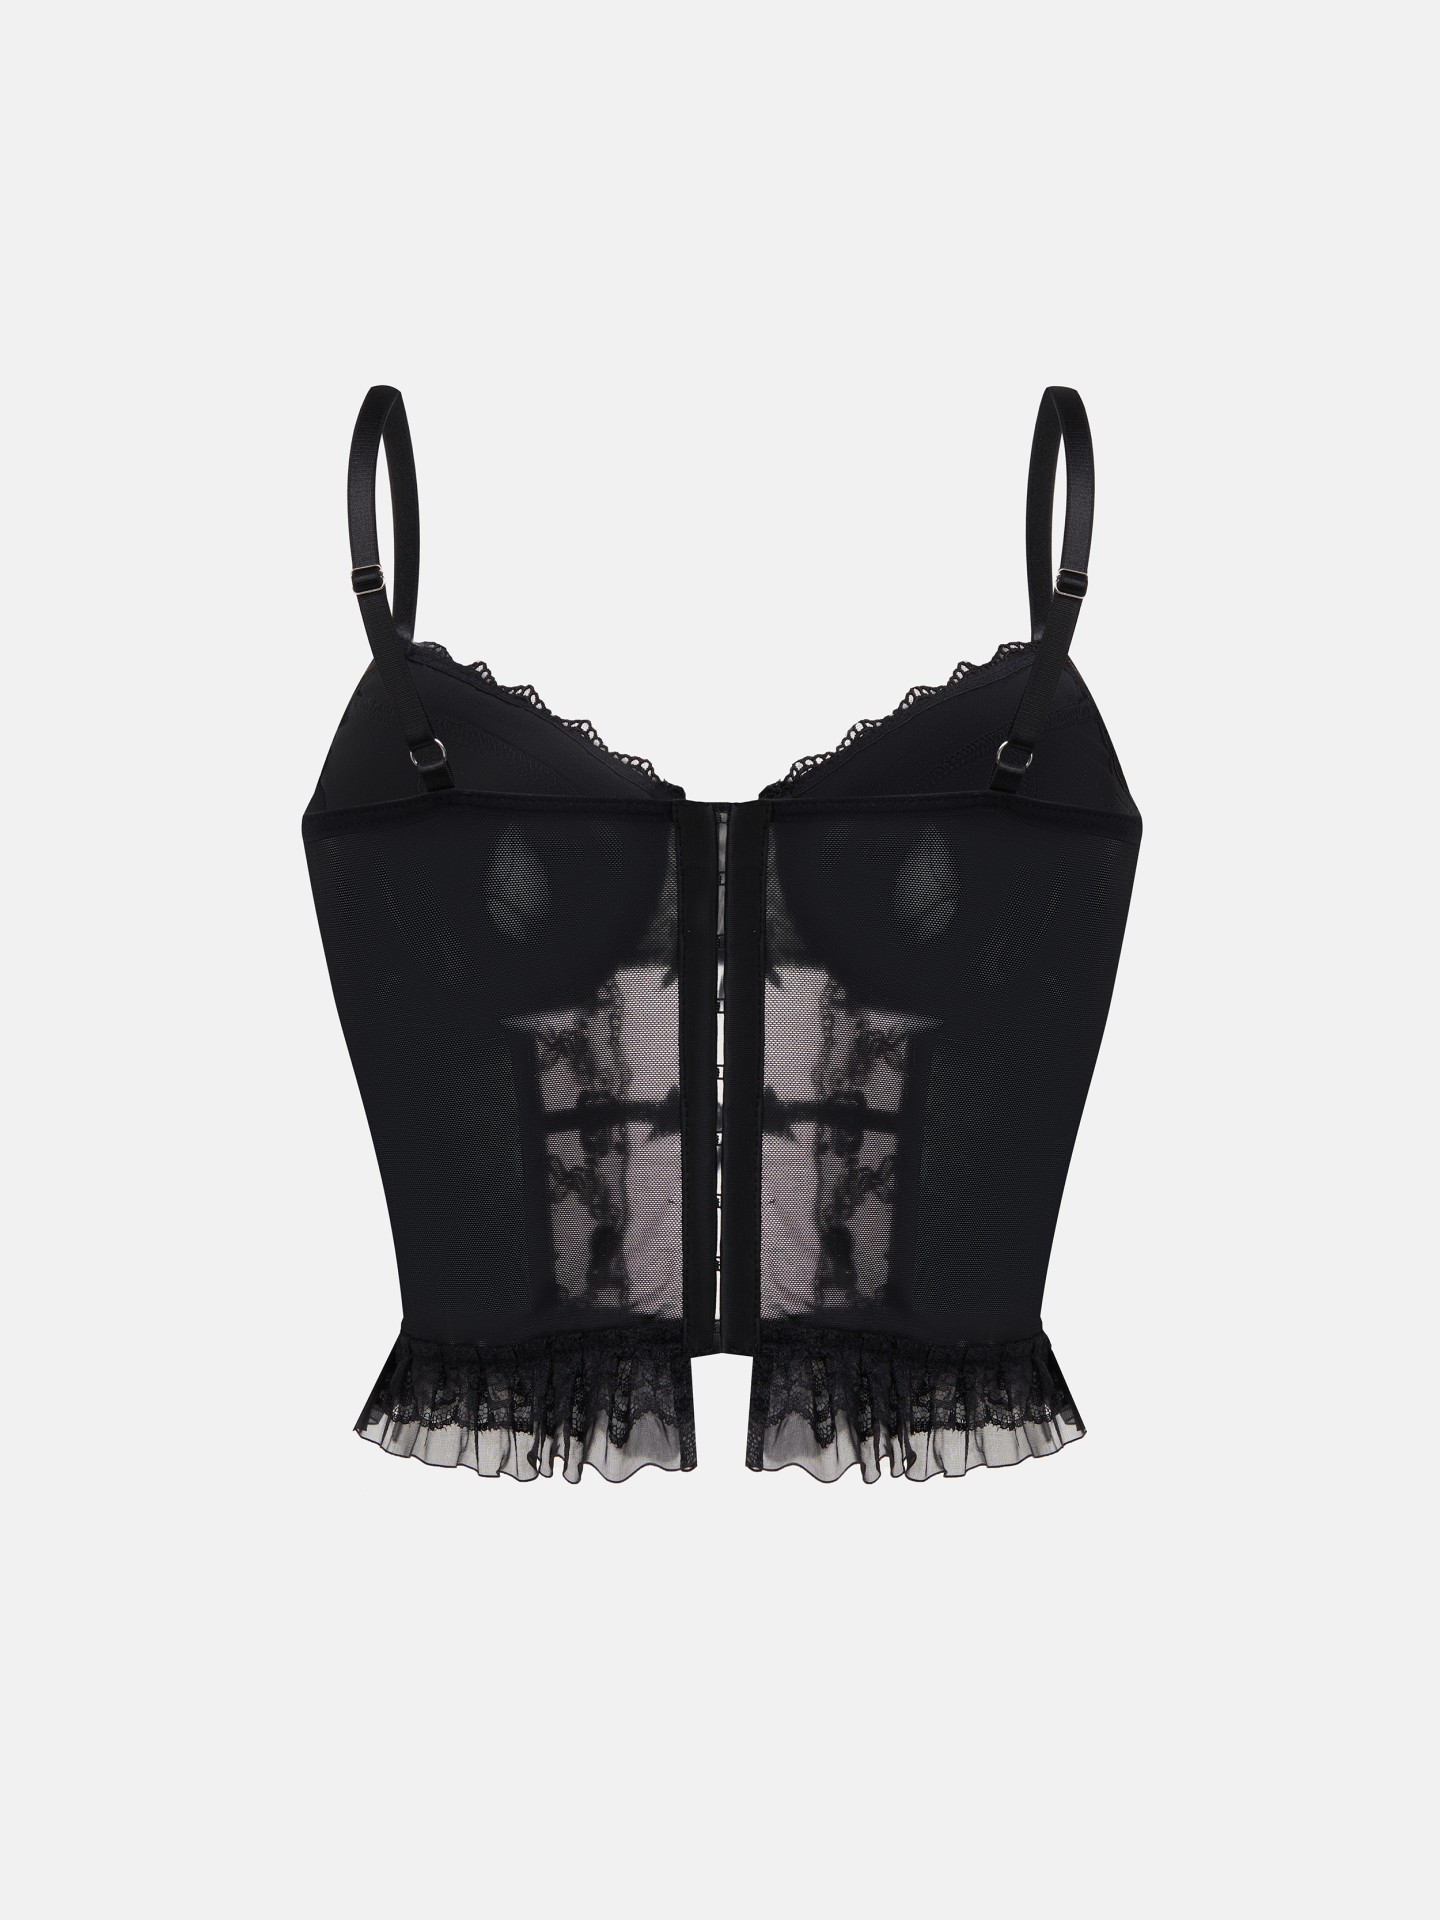 Dolce & Gabbana Black Lace Sheer Lingerie / Cami Top